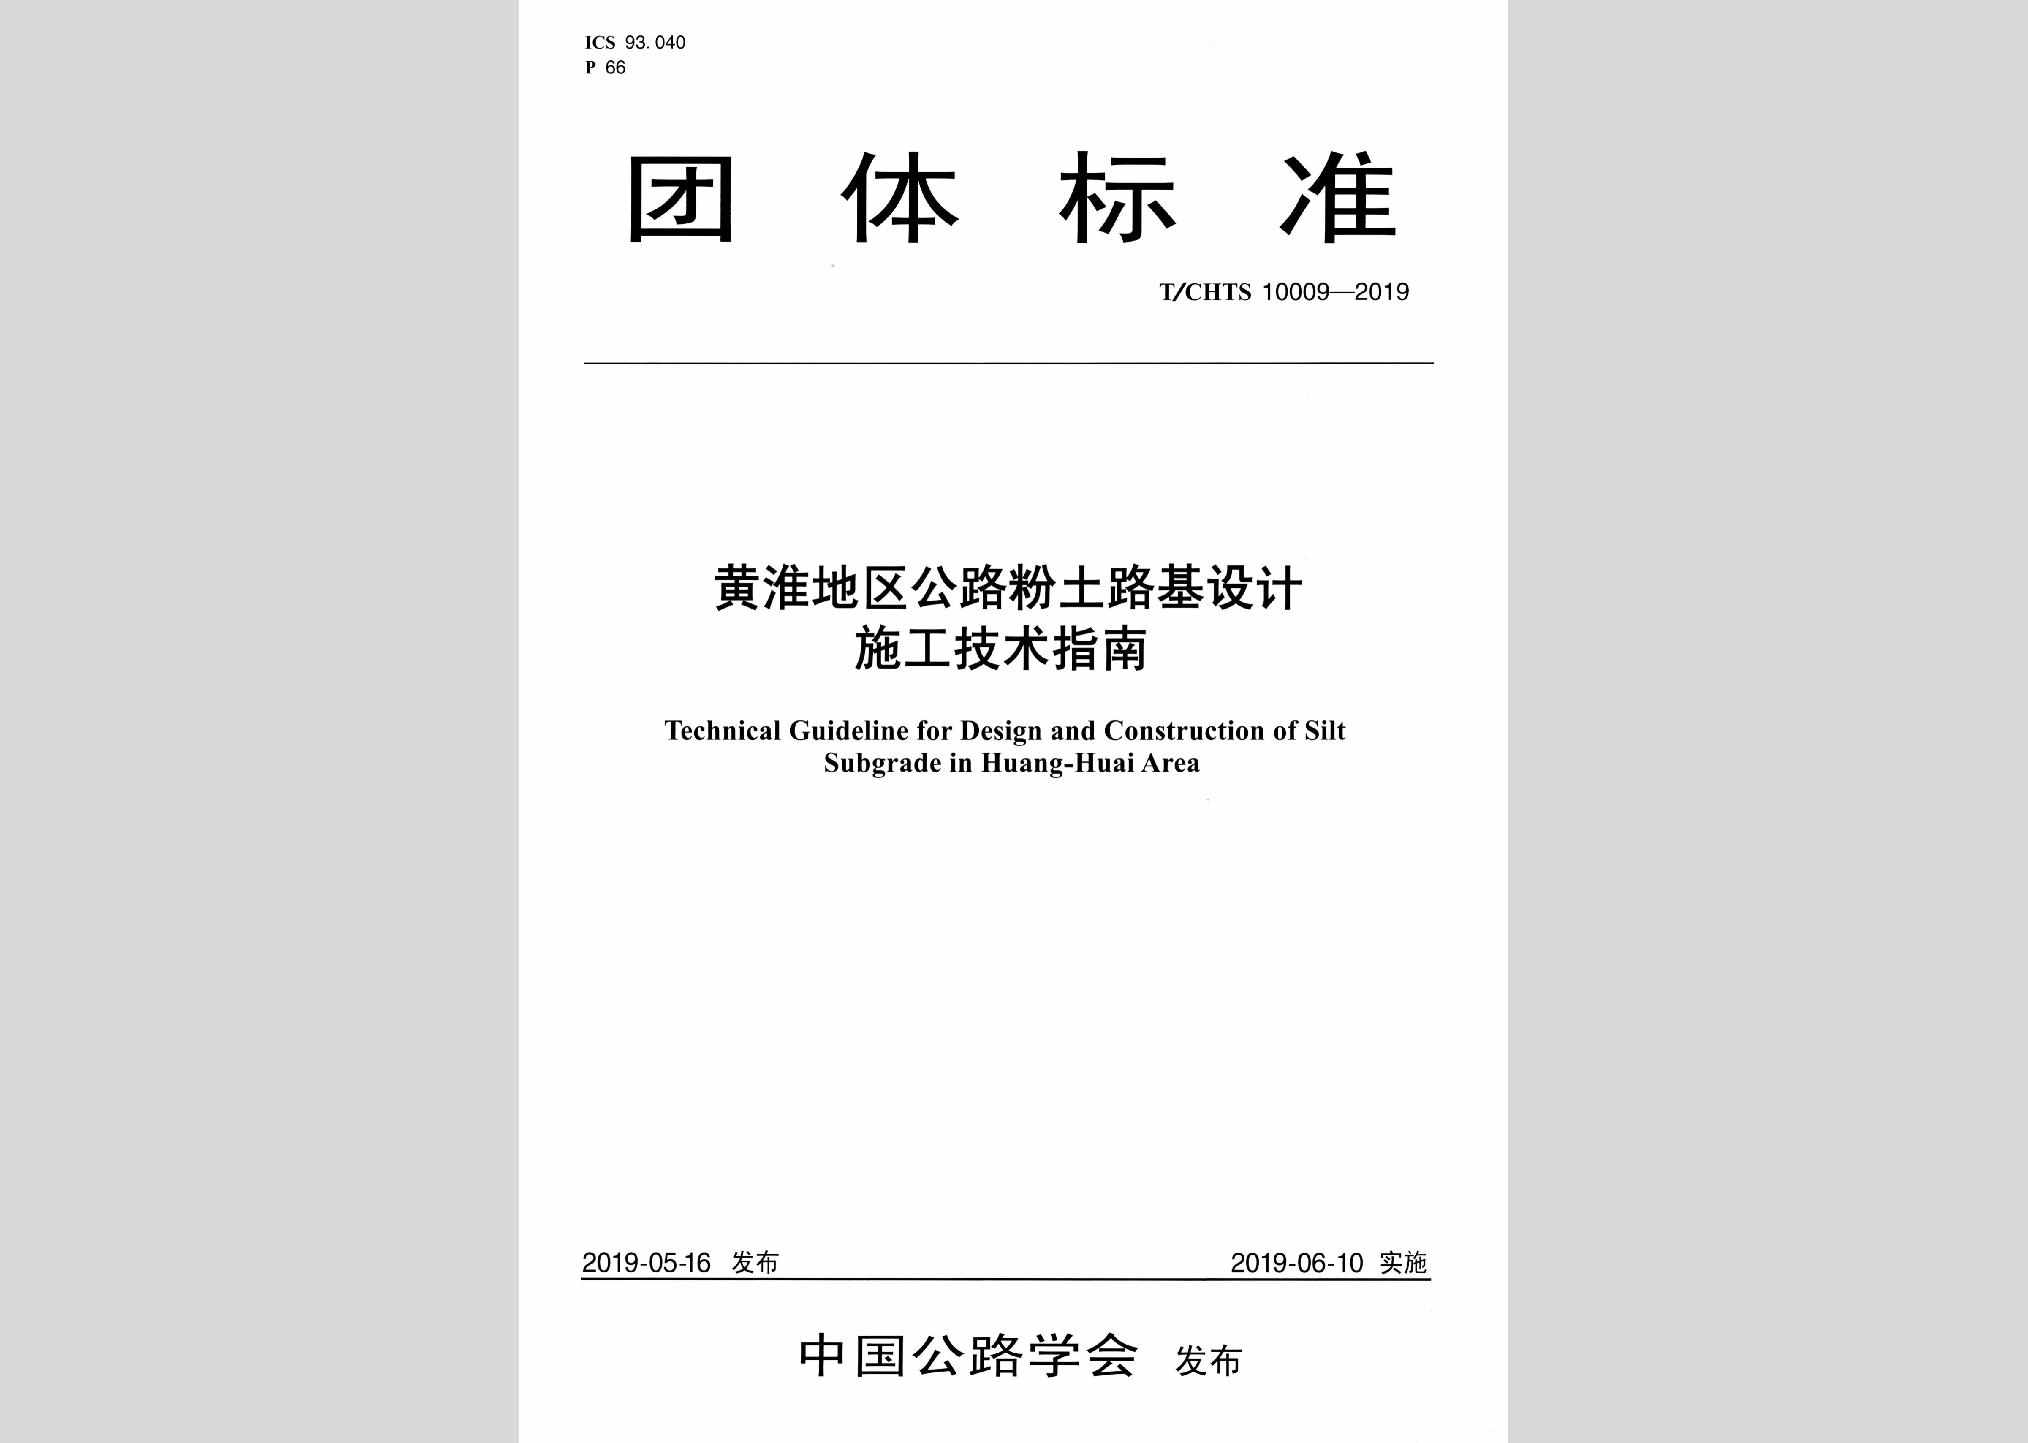 T/CHTS10009-2019：黄淮地区公路粉土路基设计施工技术指南